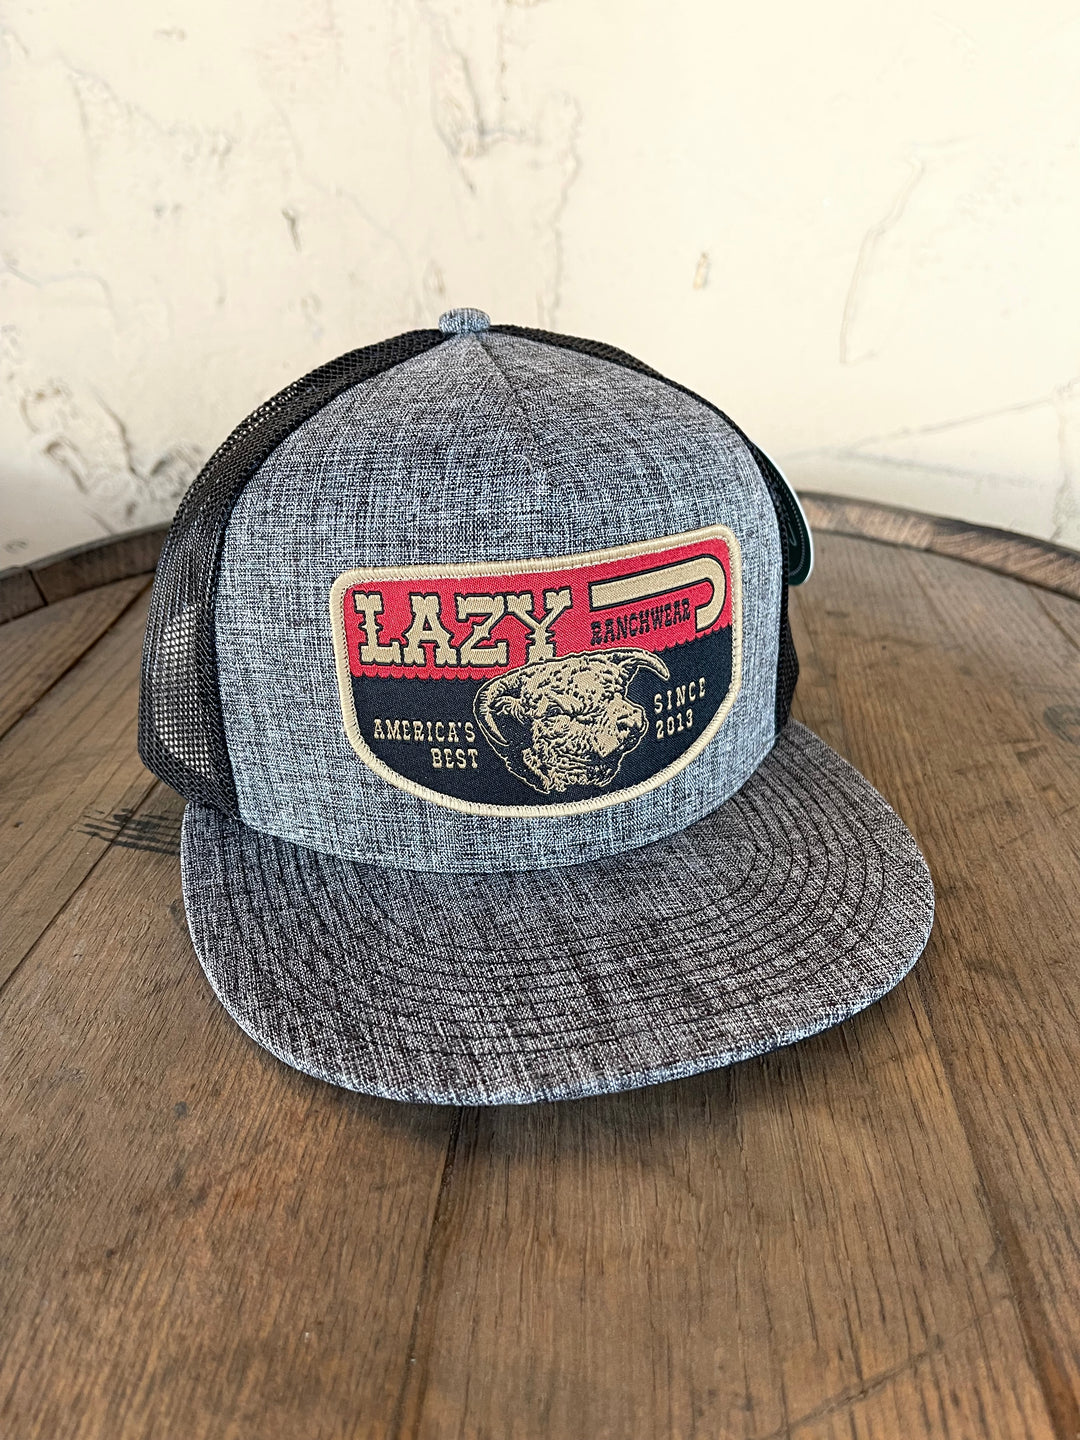 Lazy J Ranch Wear Charcoal & Black 4" America's Best Patch Cap